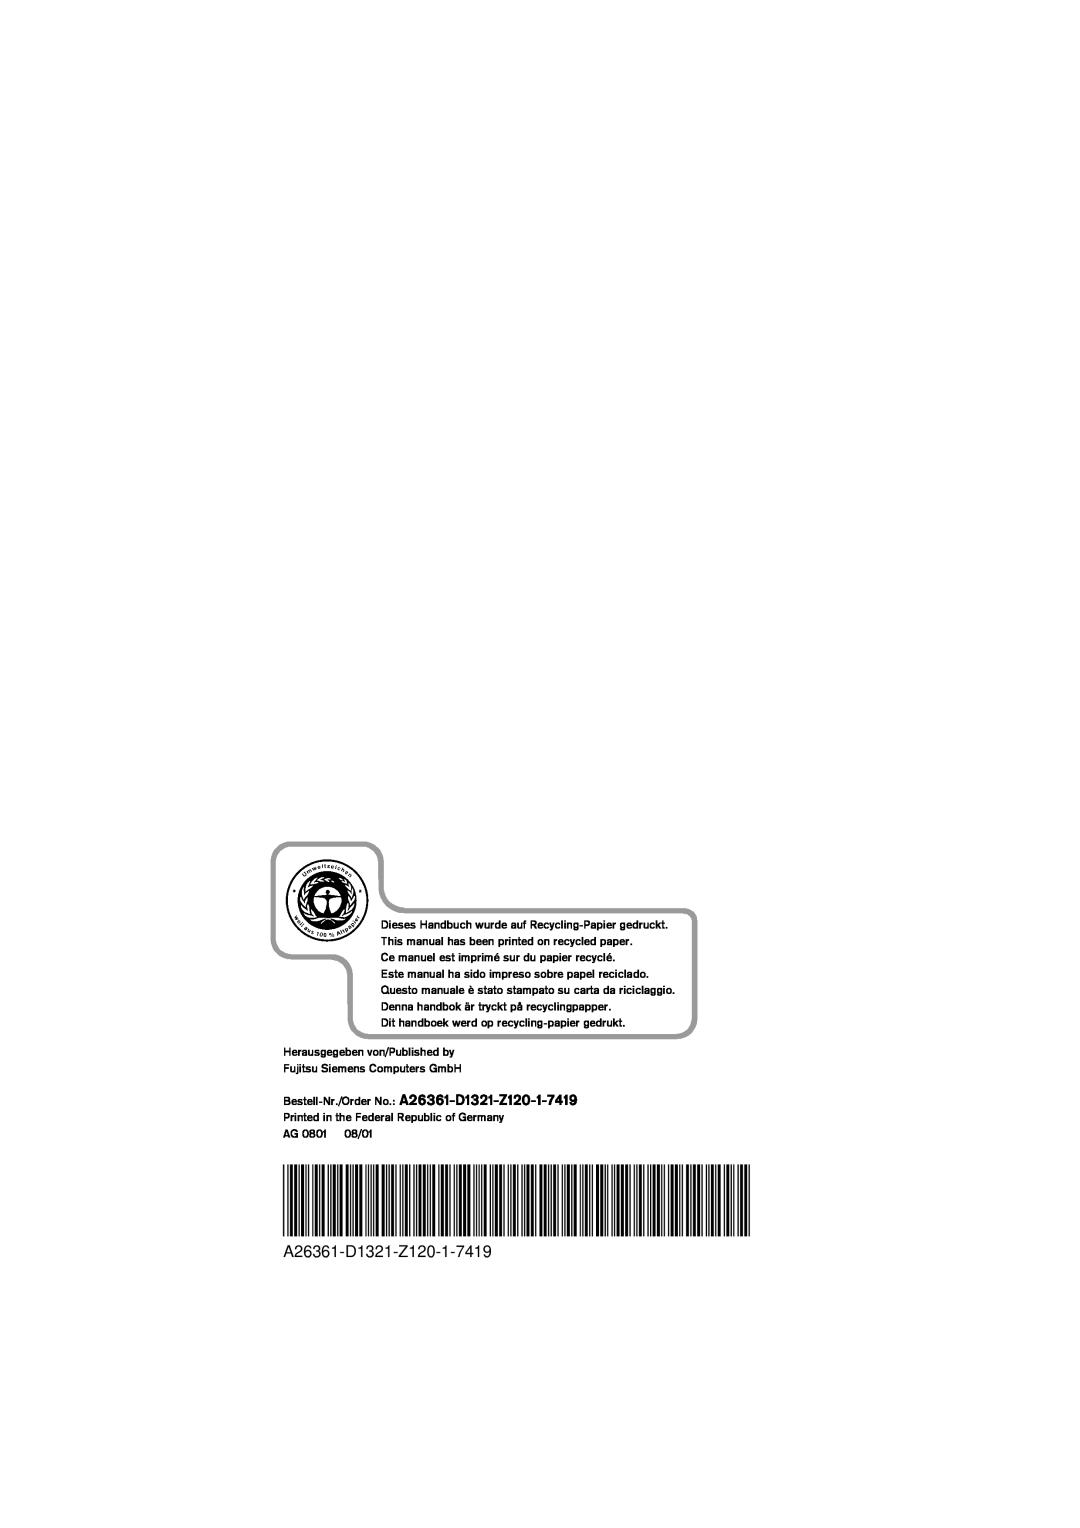 Fujitsu technical manual Bestell-Nr./Order No. A26361-D1321-Z120-1-7419 